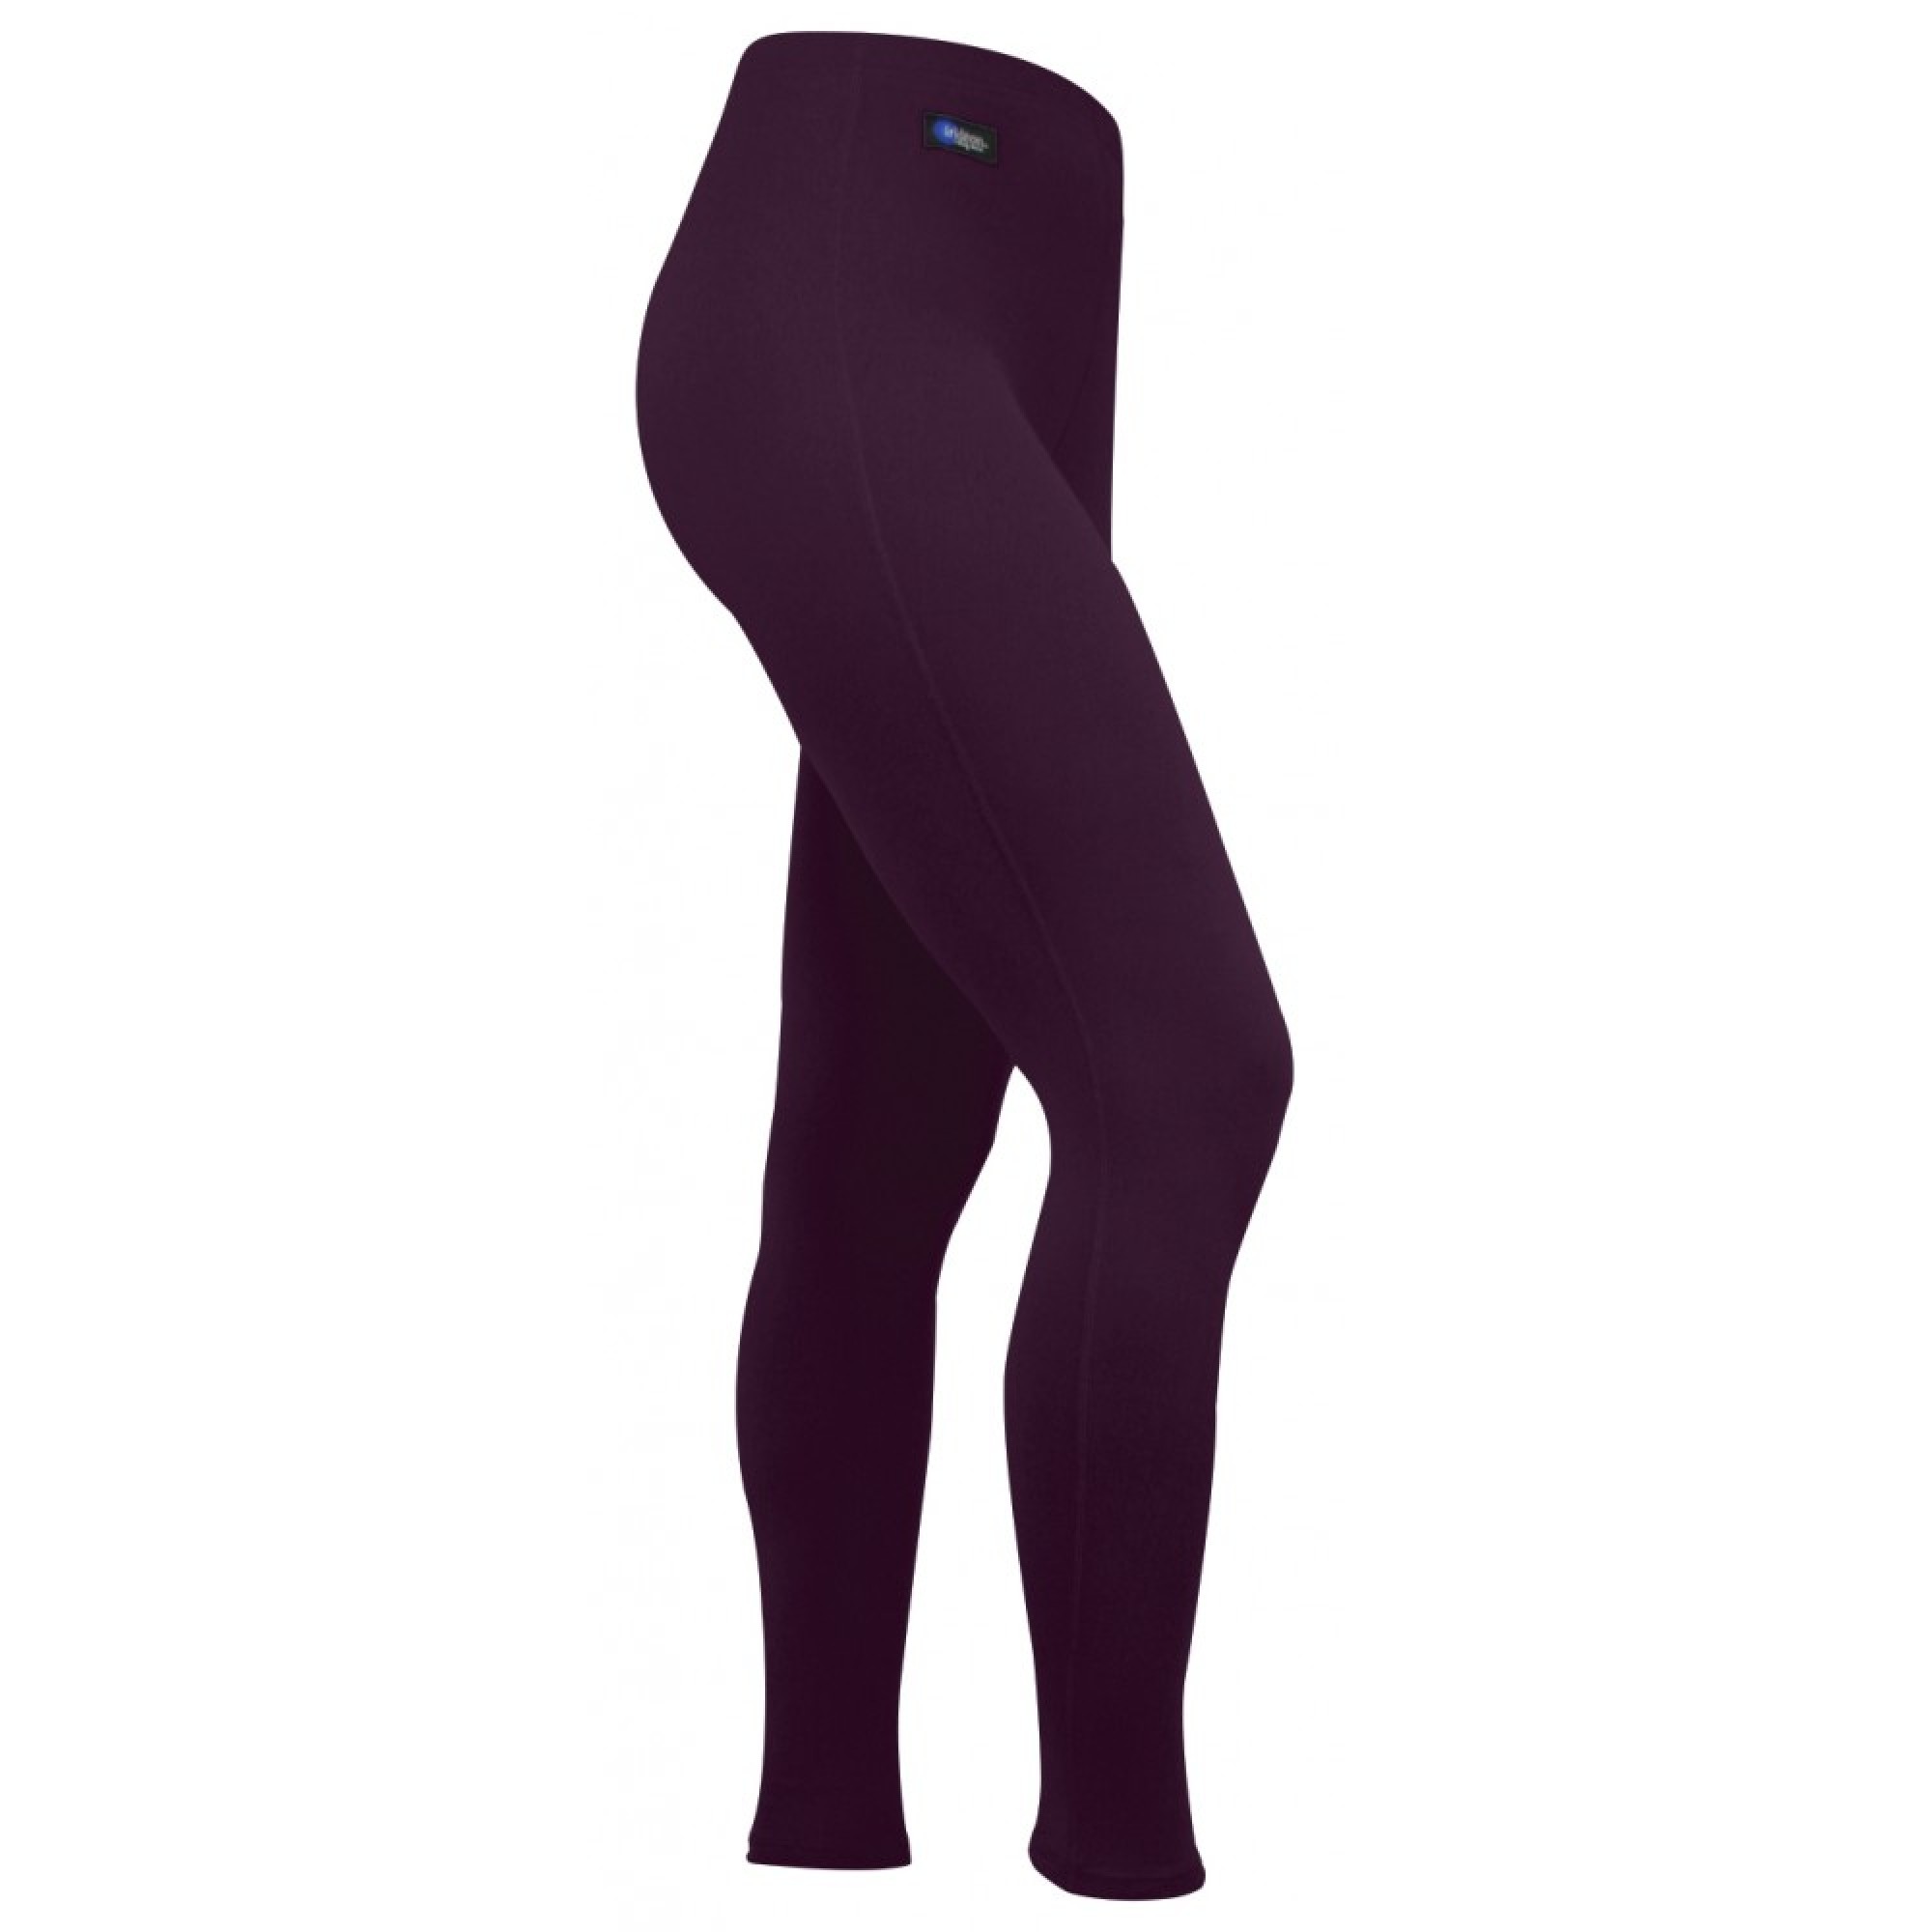 IRIDEON® Leggings regular (thermal underwear)